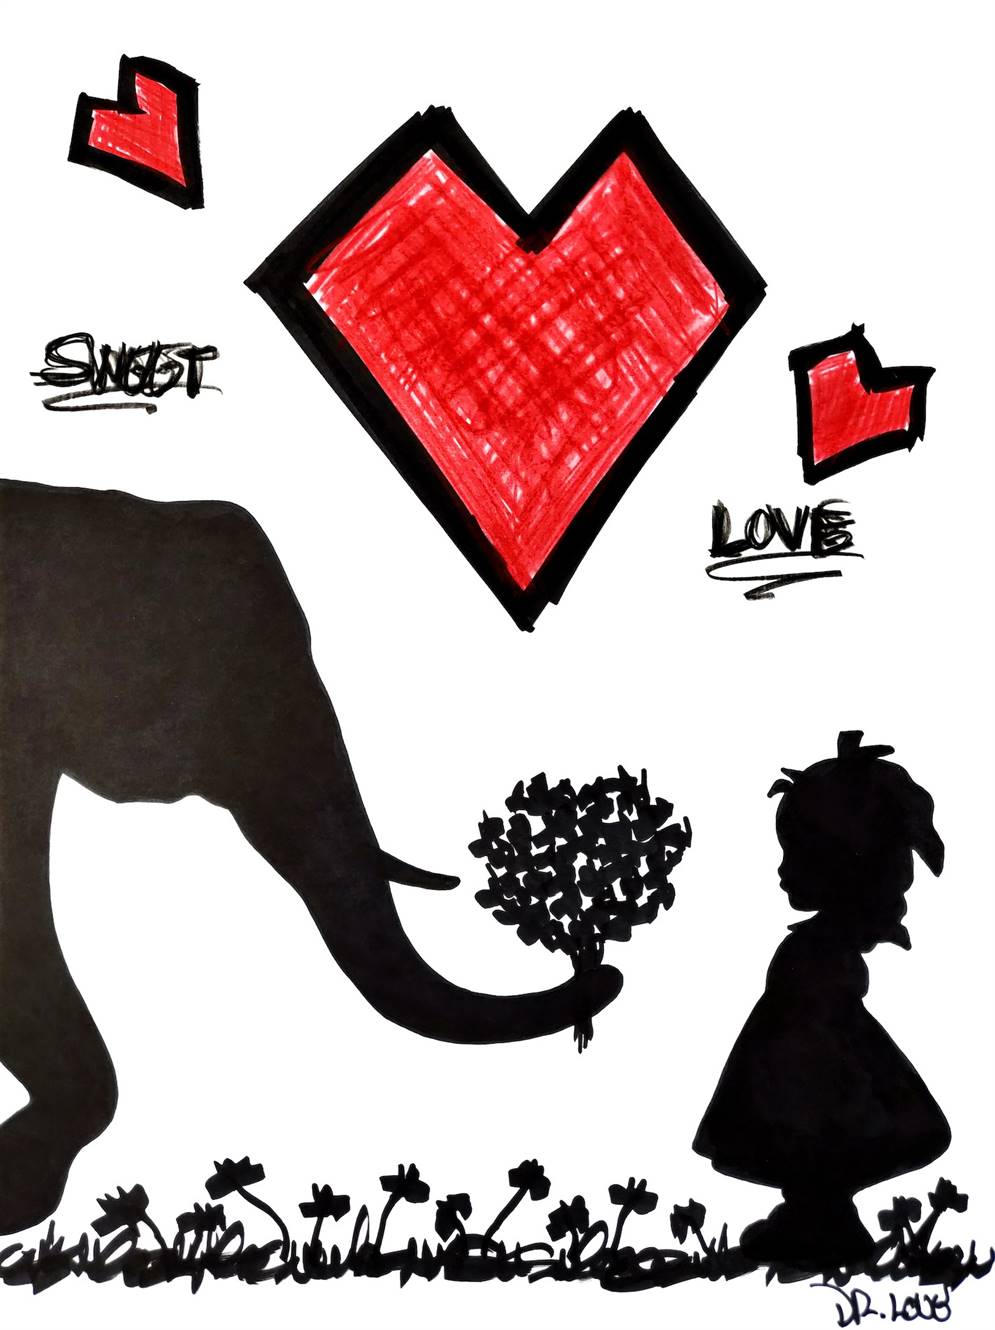 Dr. Love - Elephant's love canvas